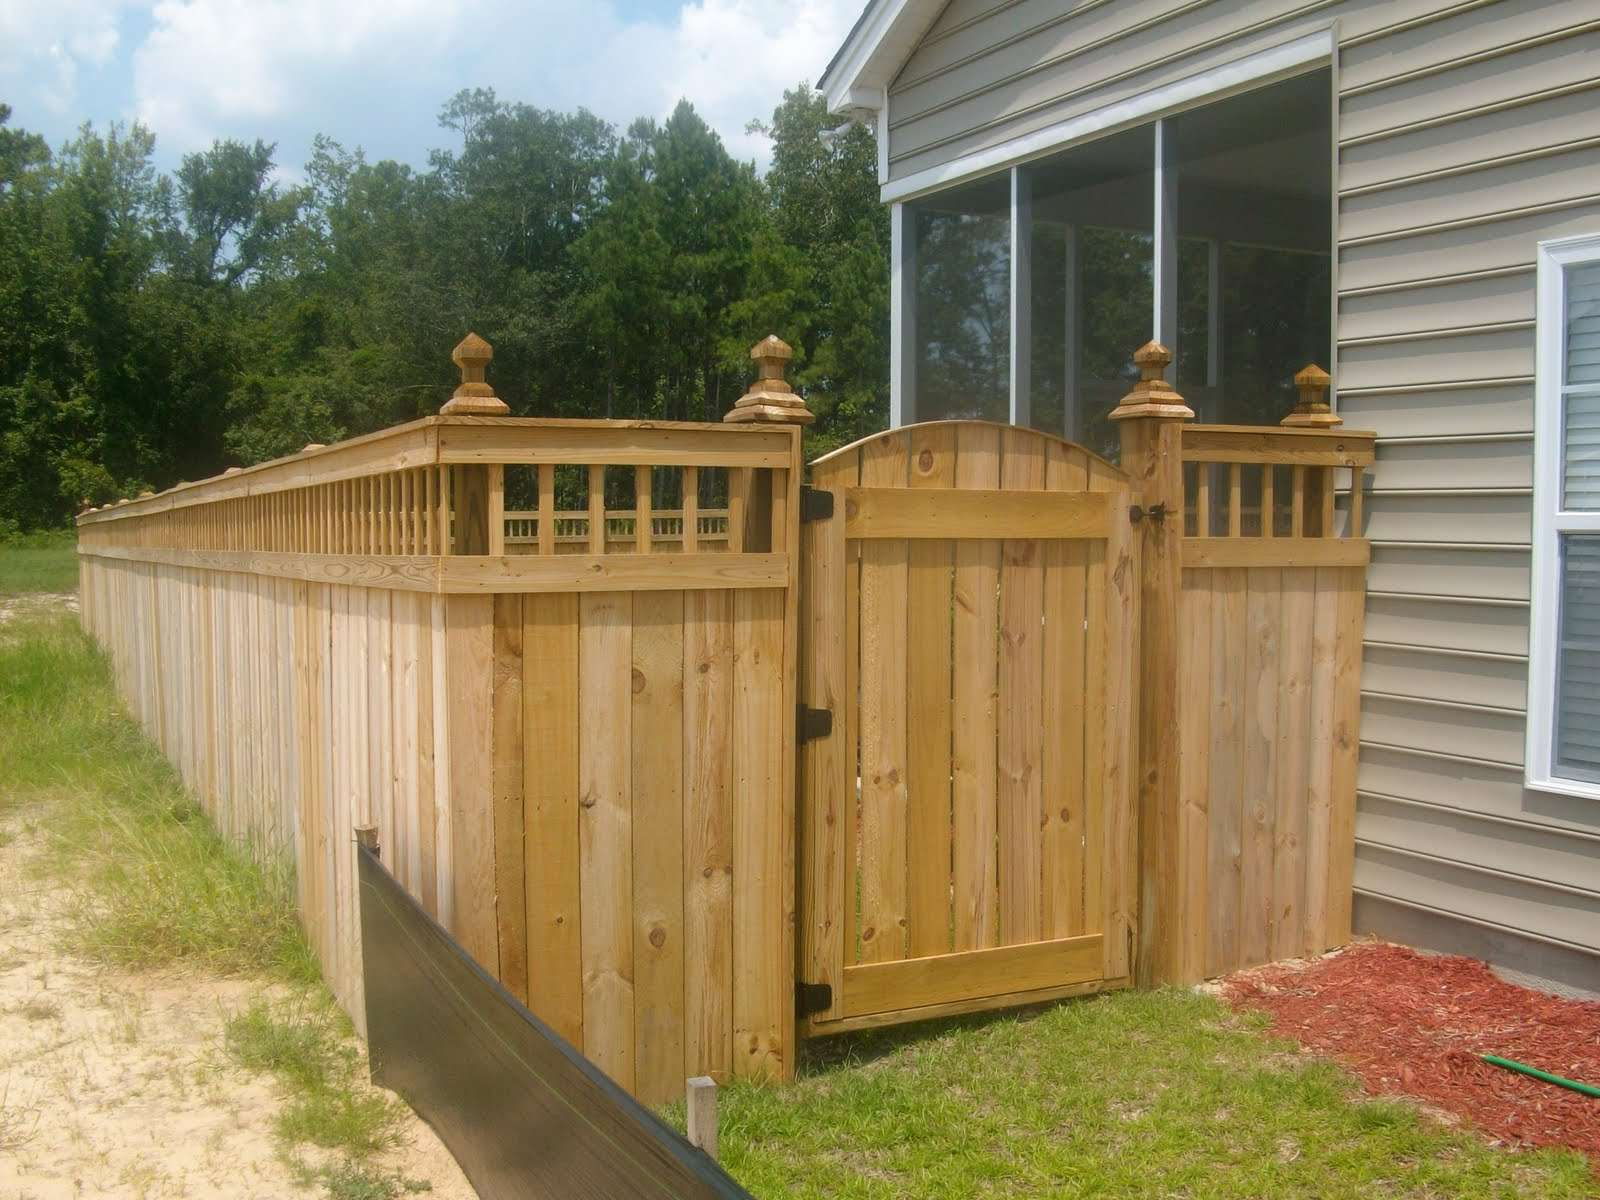 Wood Fence Gate Scheme Of Wooden Gate Ideas Inspiring Home Decor regarding sizing 1600 X 1200